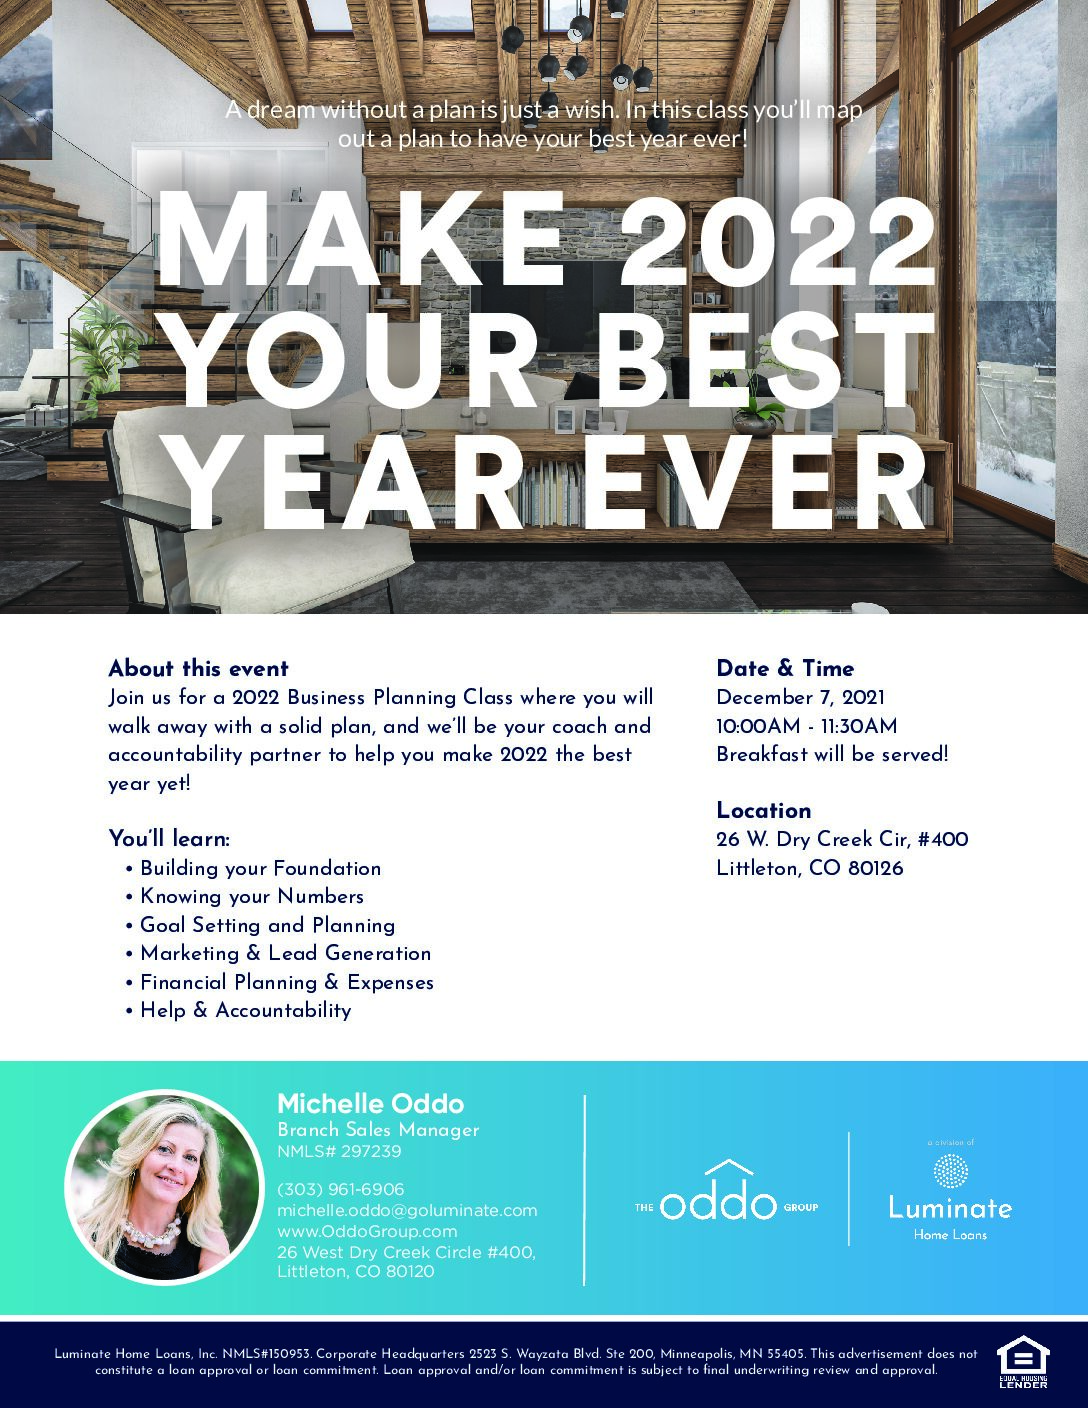 Michelle Oddo event Denver Best Year Ever 2022